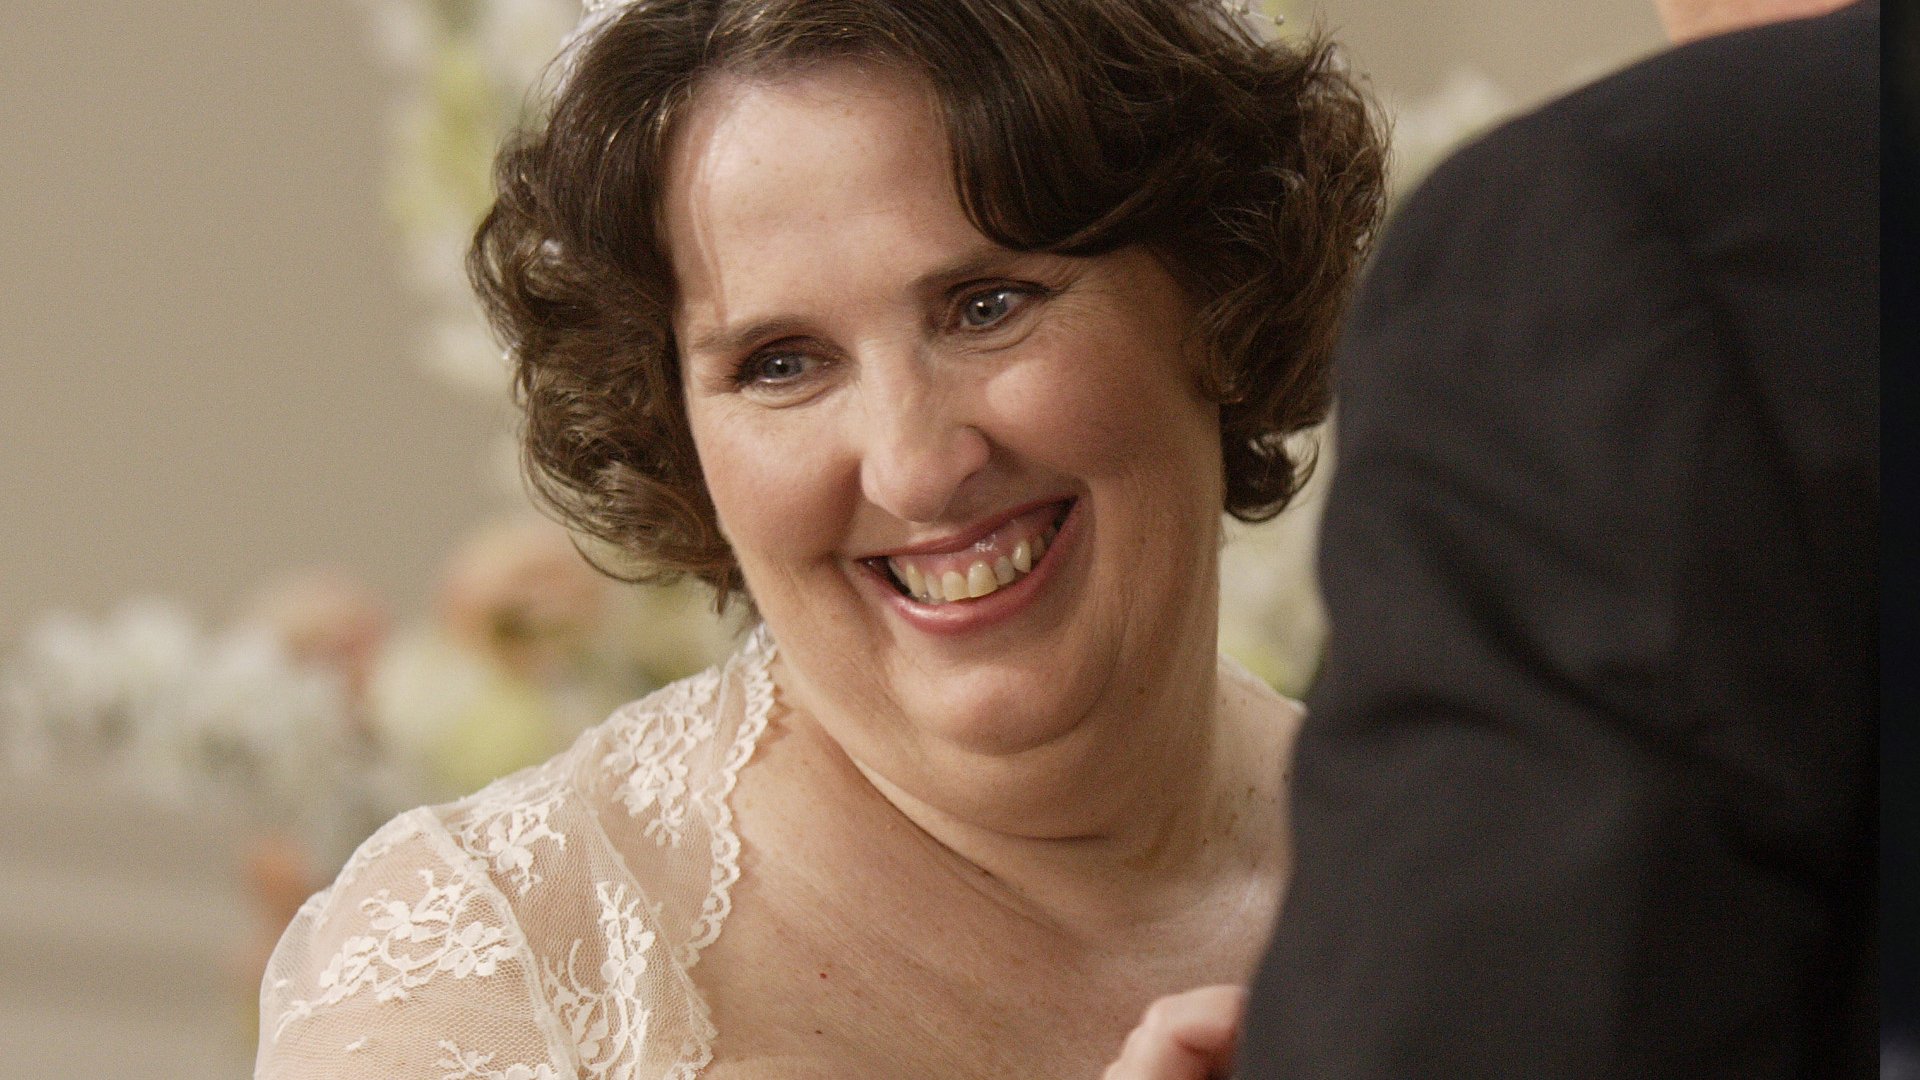 Phyllis Smith as Phyllis Lapin-Vance on 'The Office' Season 3 Episode 16 - "Phyllis' Wedding"